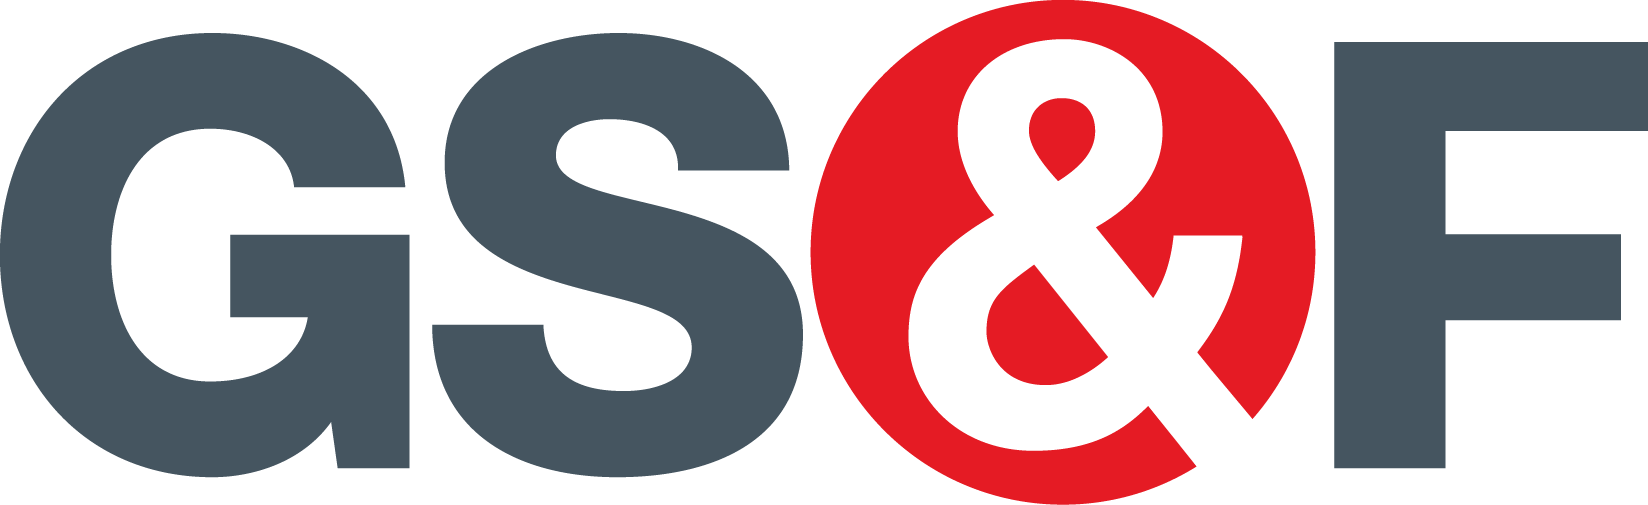 GS&F Company Logo